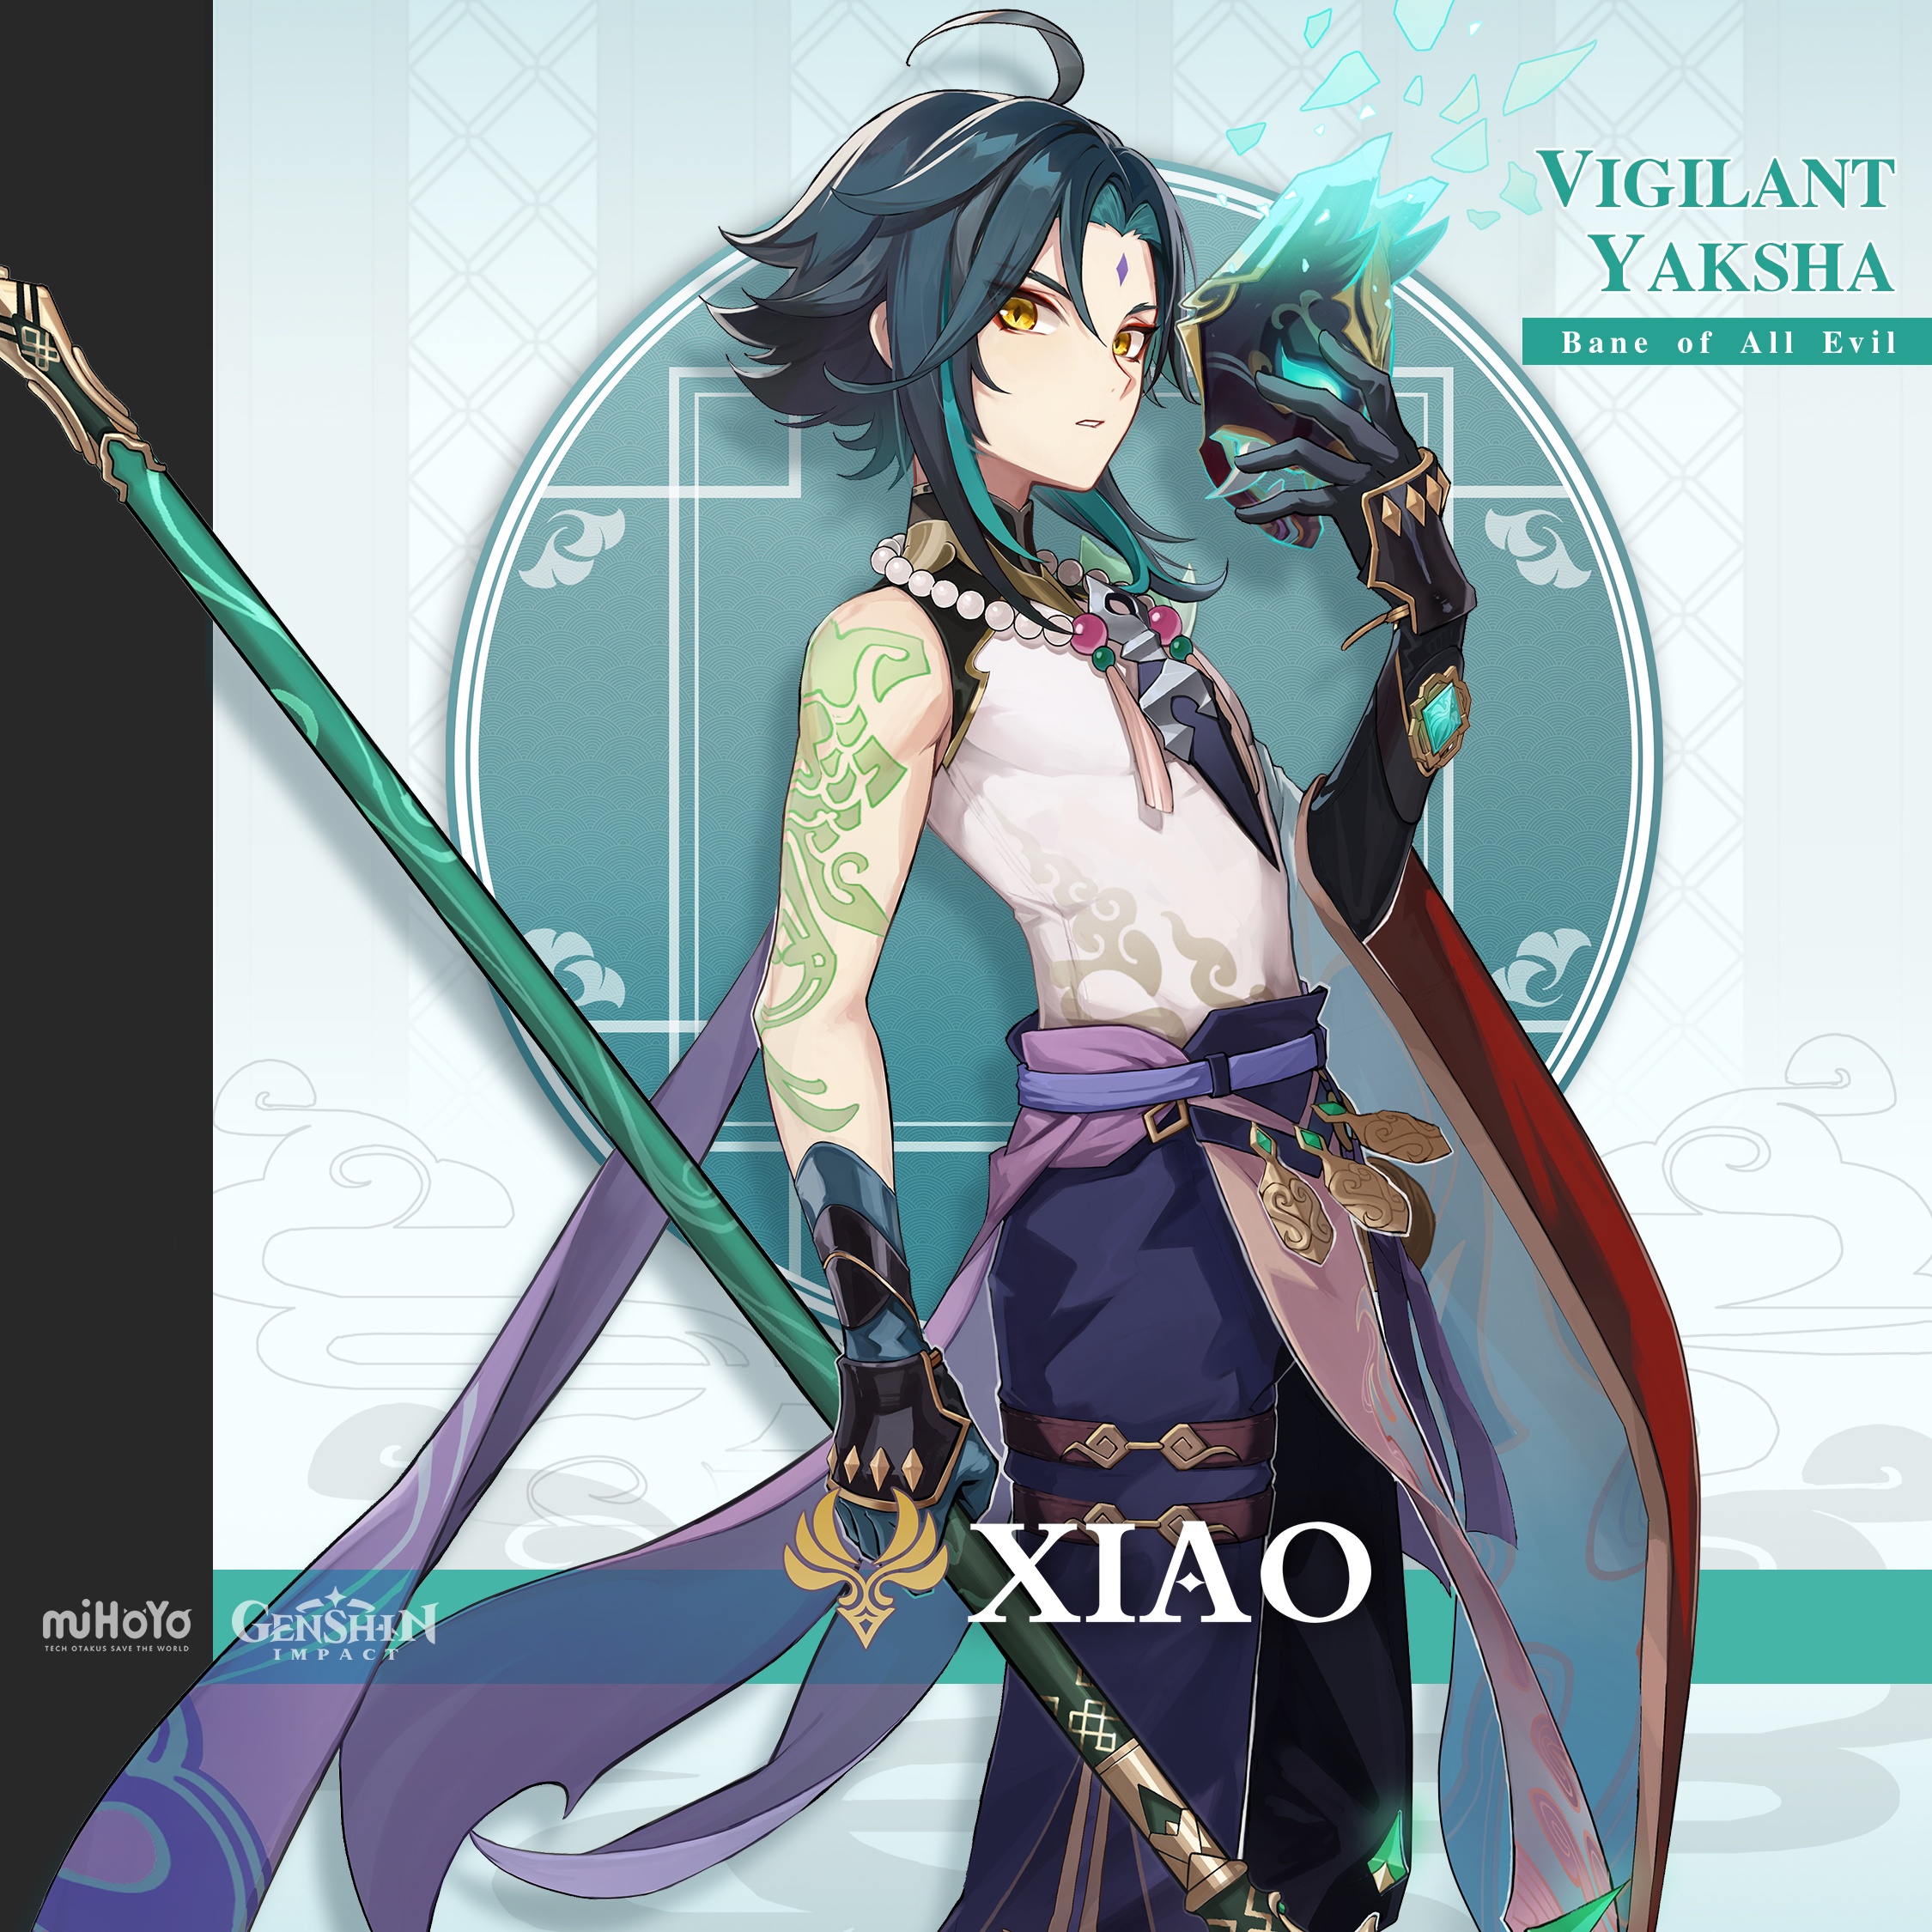 Genshin Impact 1.3 Update - Overview of Xiao, the Vigilant Yaksha